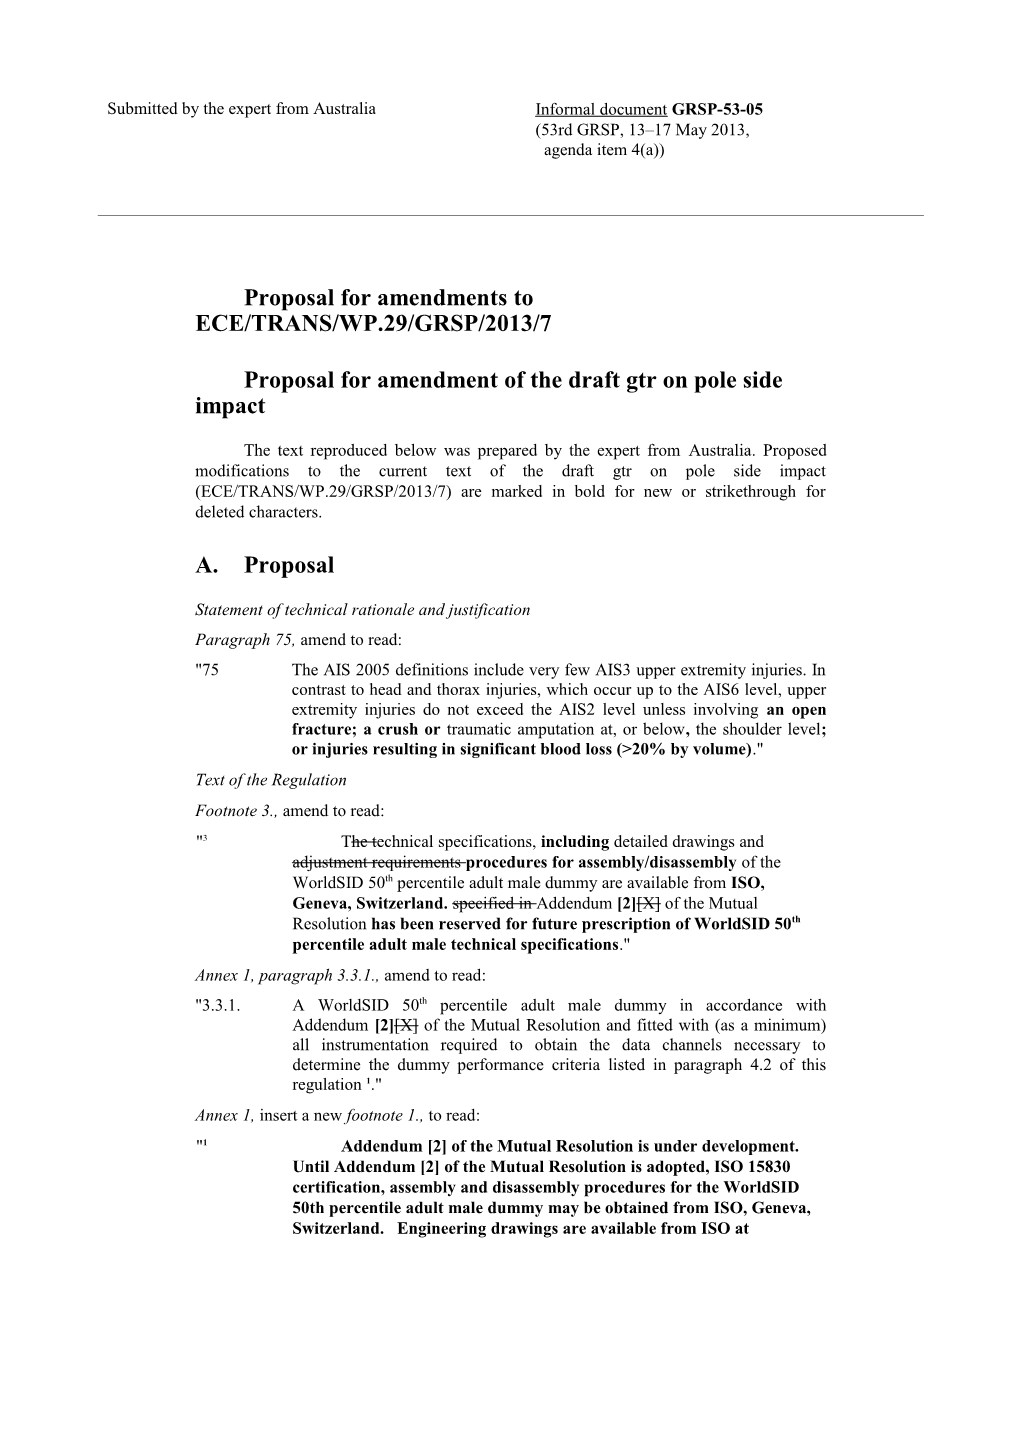 Proposal for Amendments to ECE/TRANS/WP.29/GRSP/2013/7